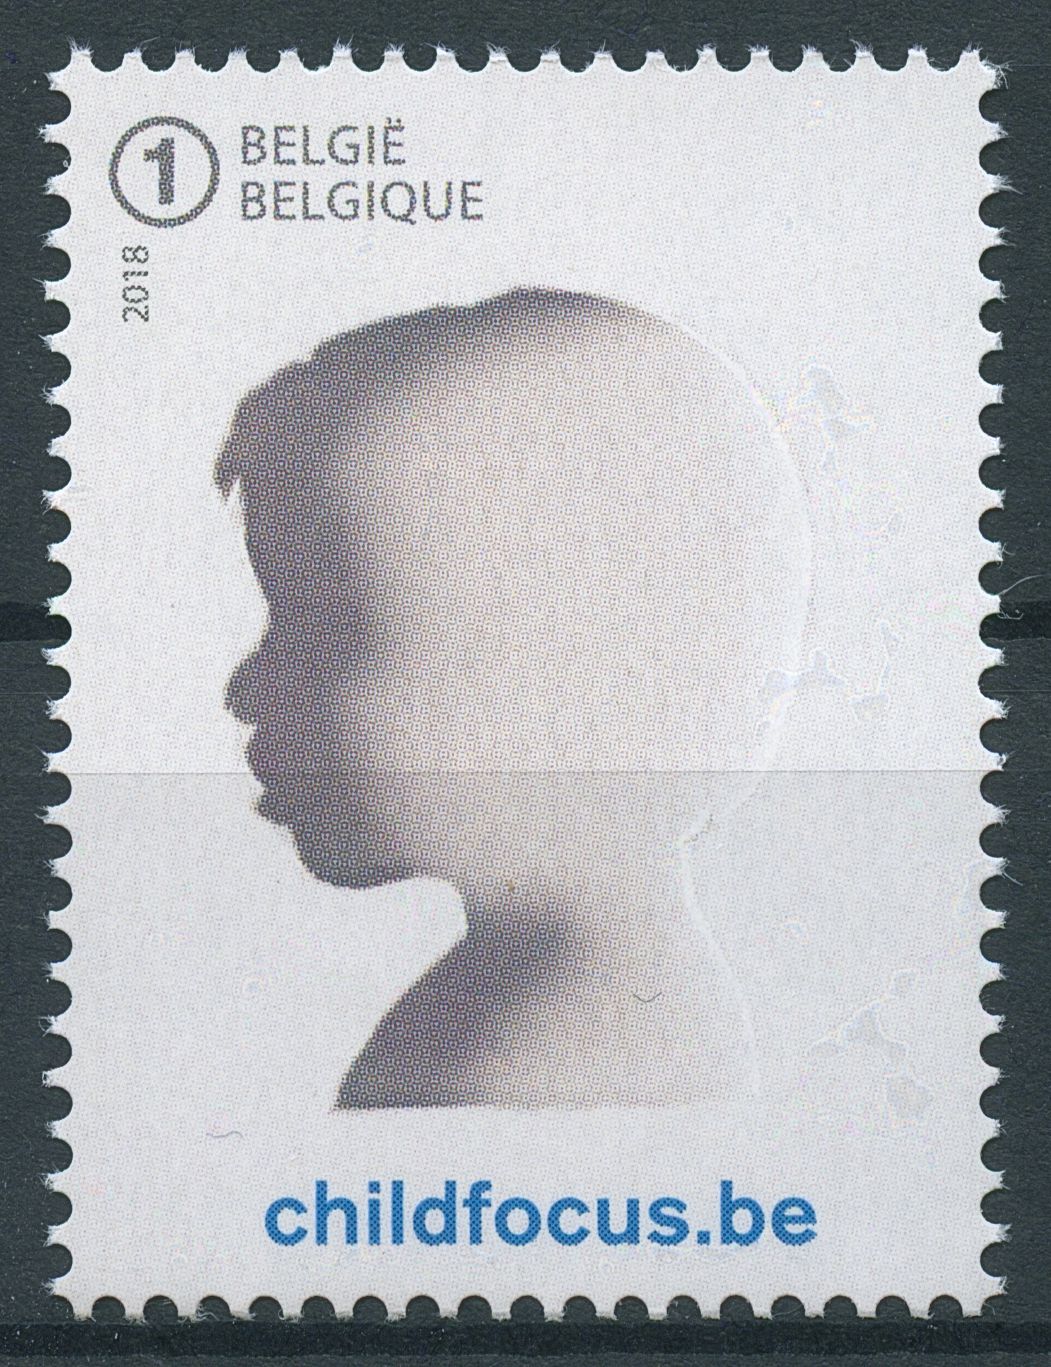 Belgium 2018 MNH Child Focus Childfocus.be 1v Set Stamps